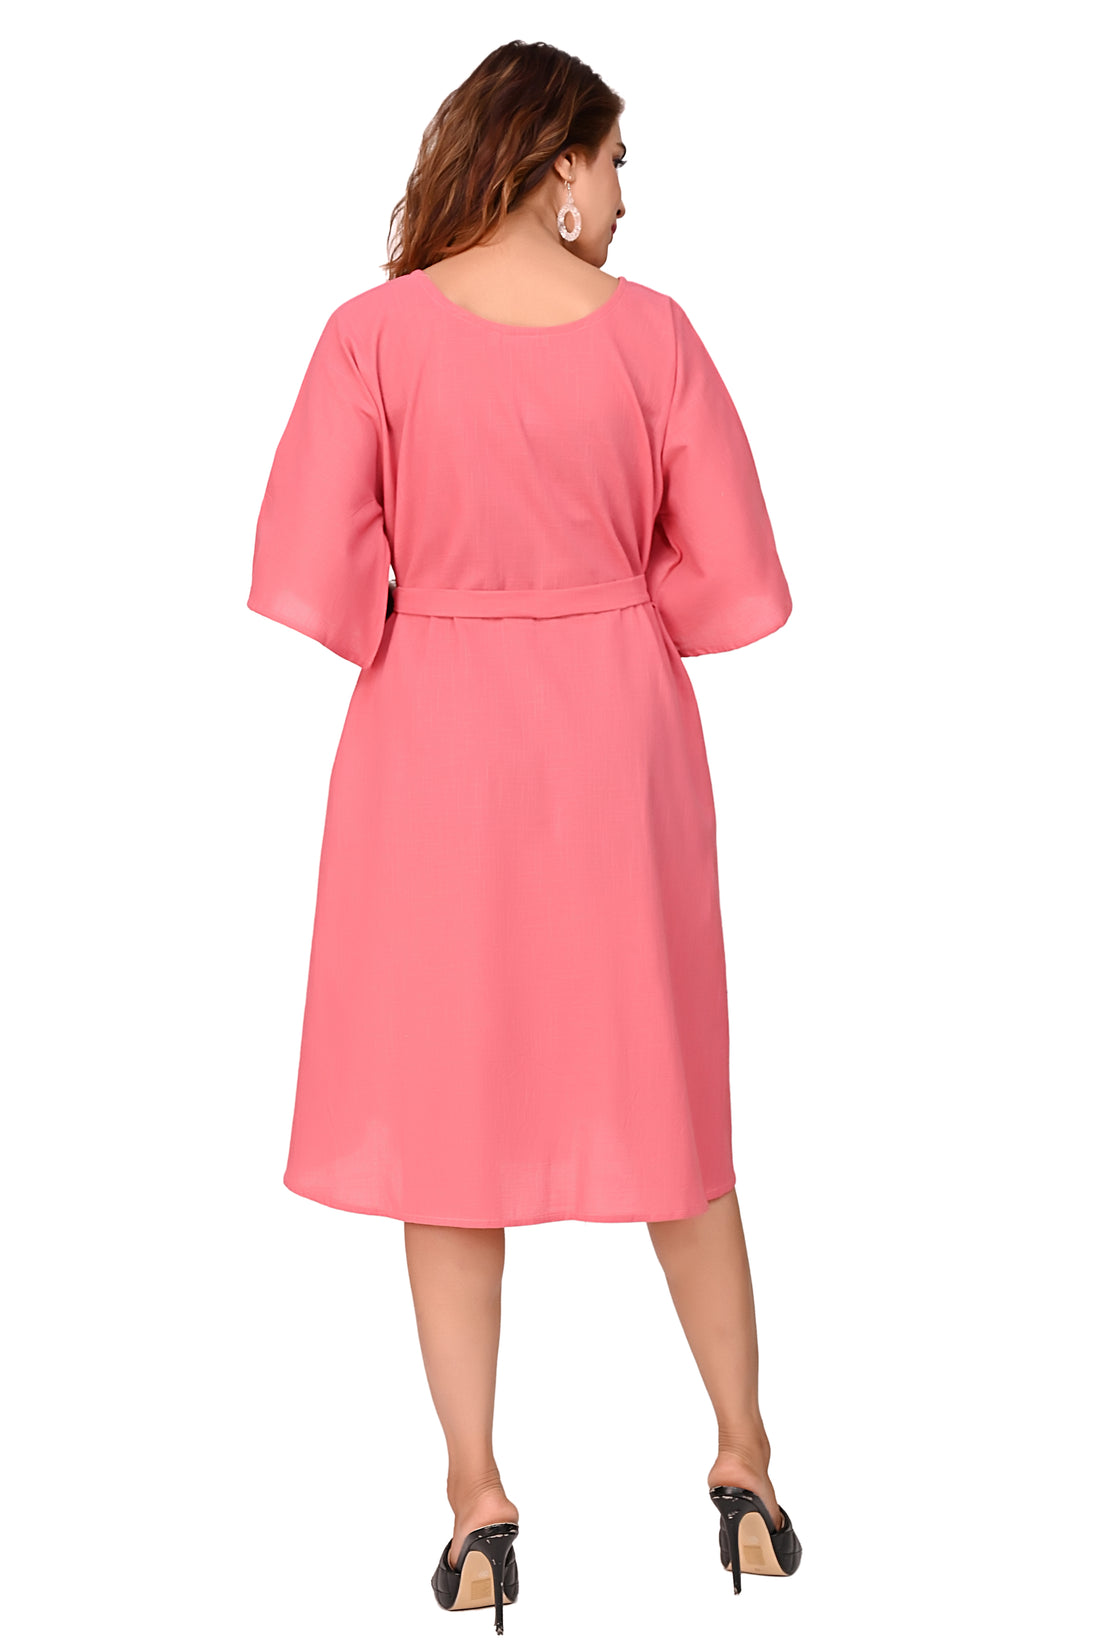 Nirmal online Premium Quality Cotton Slub Tunic Dress for Women in Coral Pink Colour